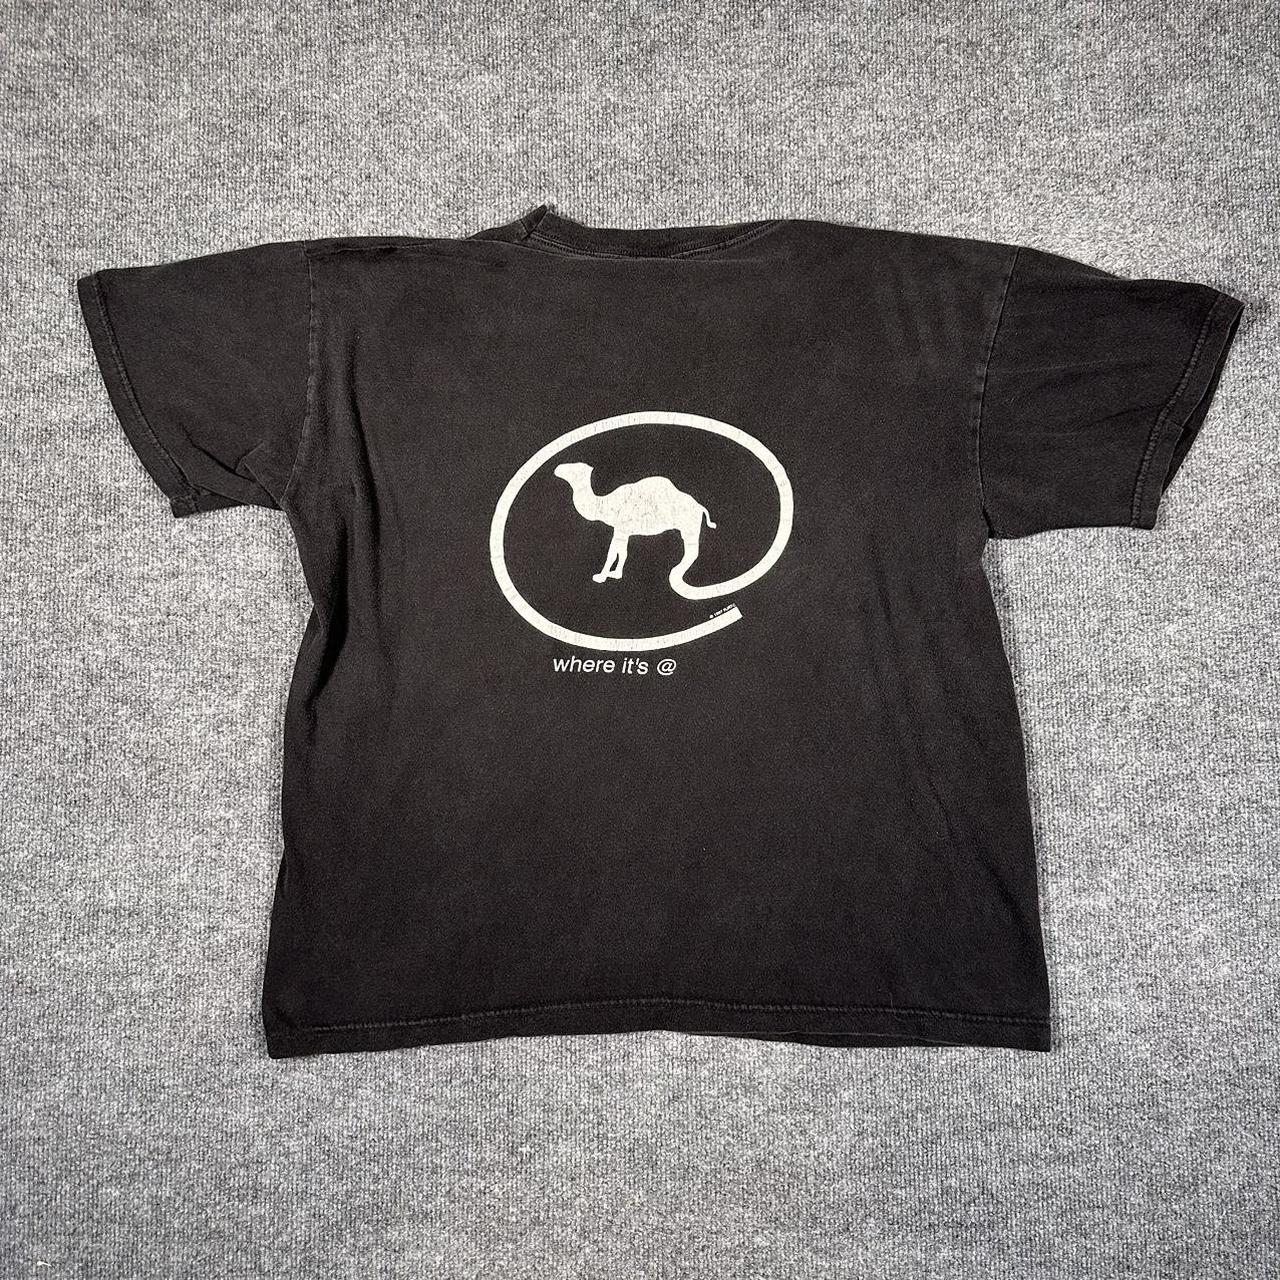 Camel Men's Black and White T-shirt (2)